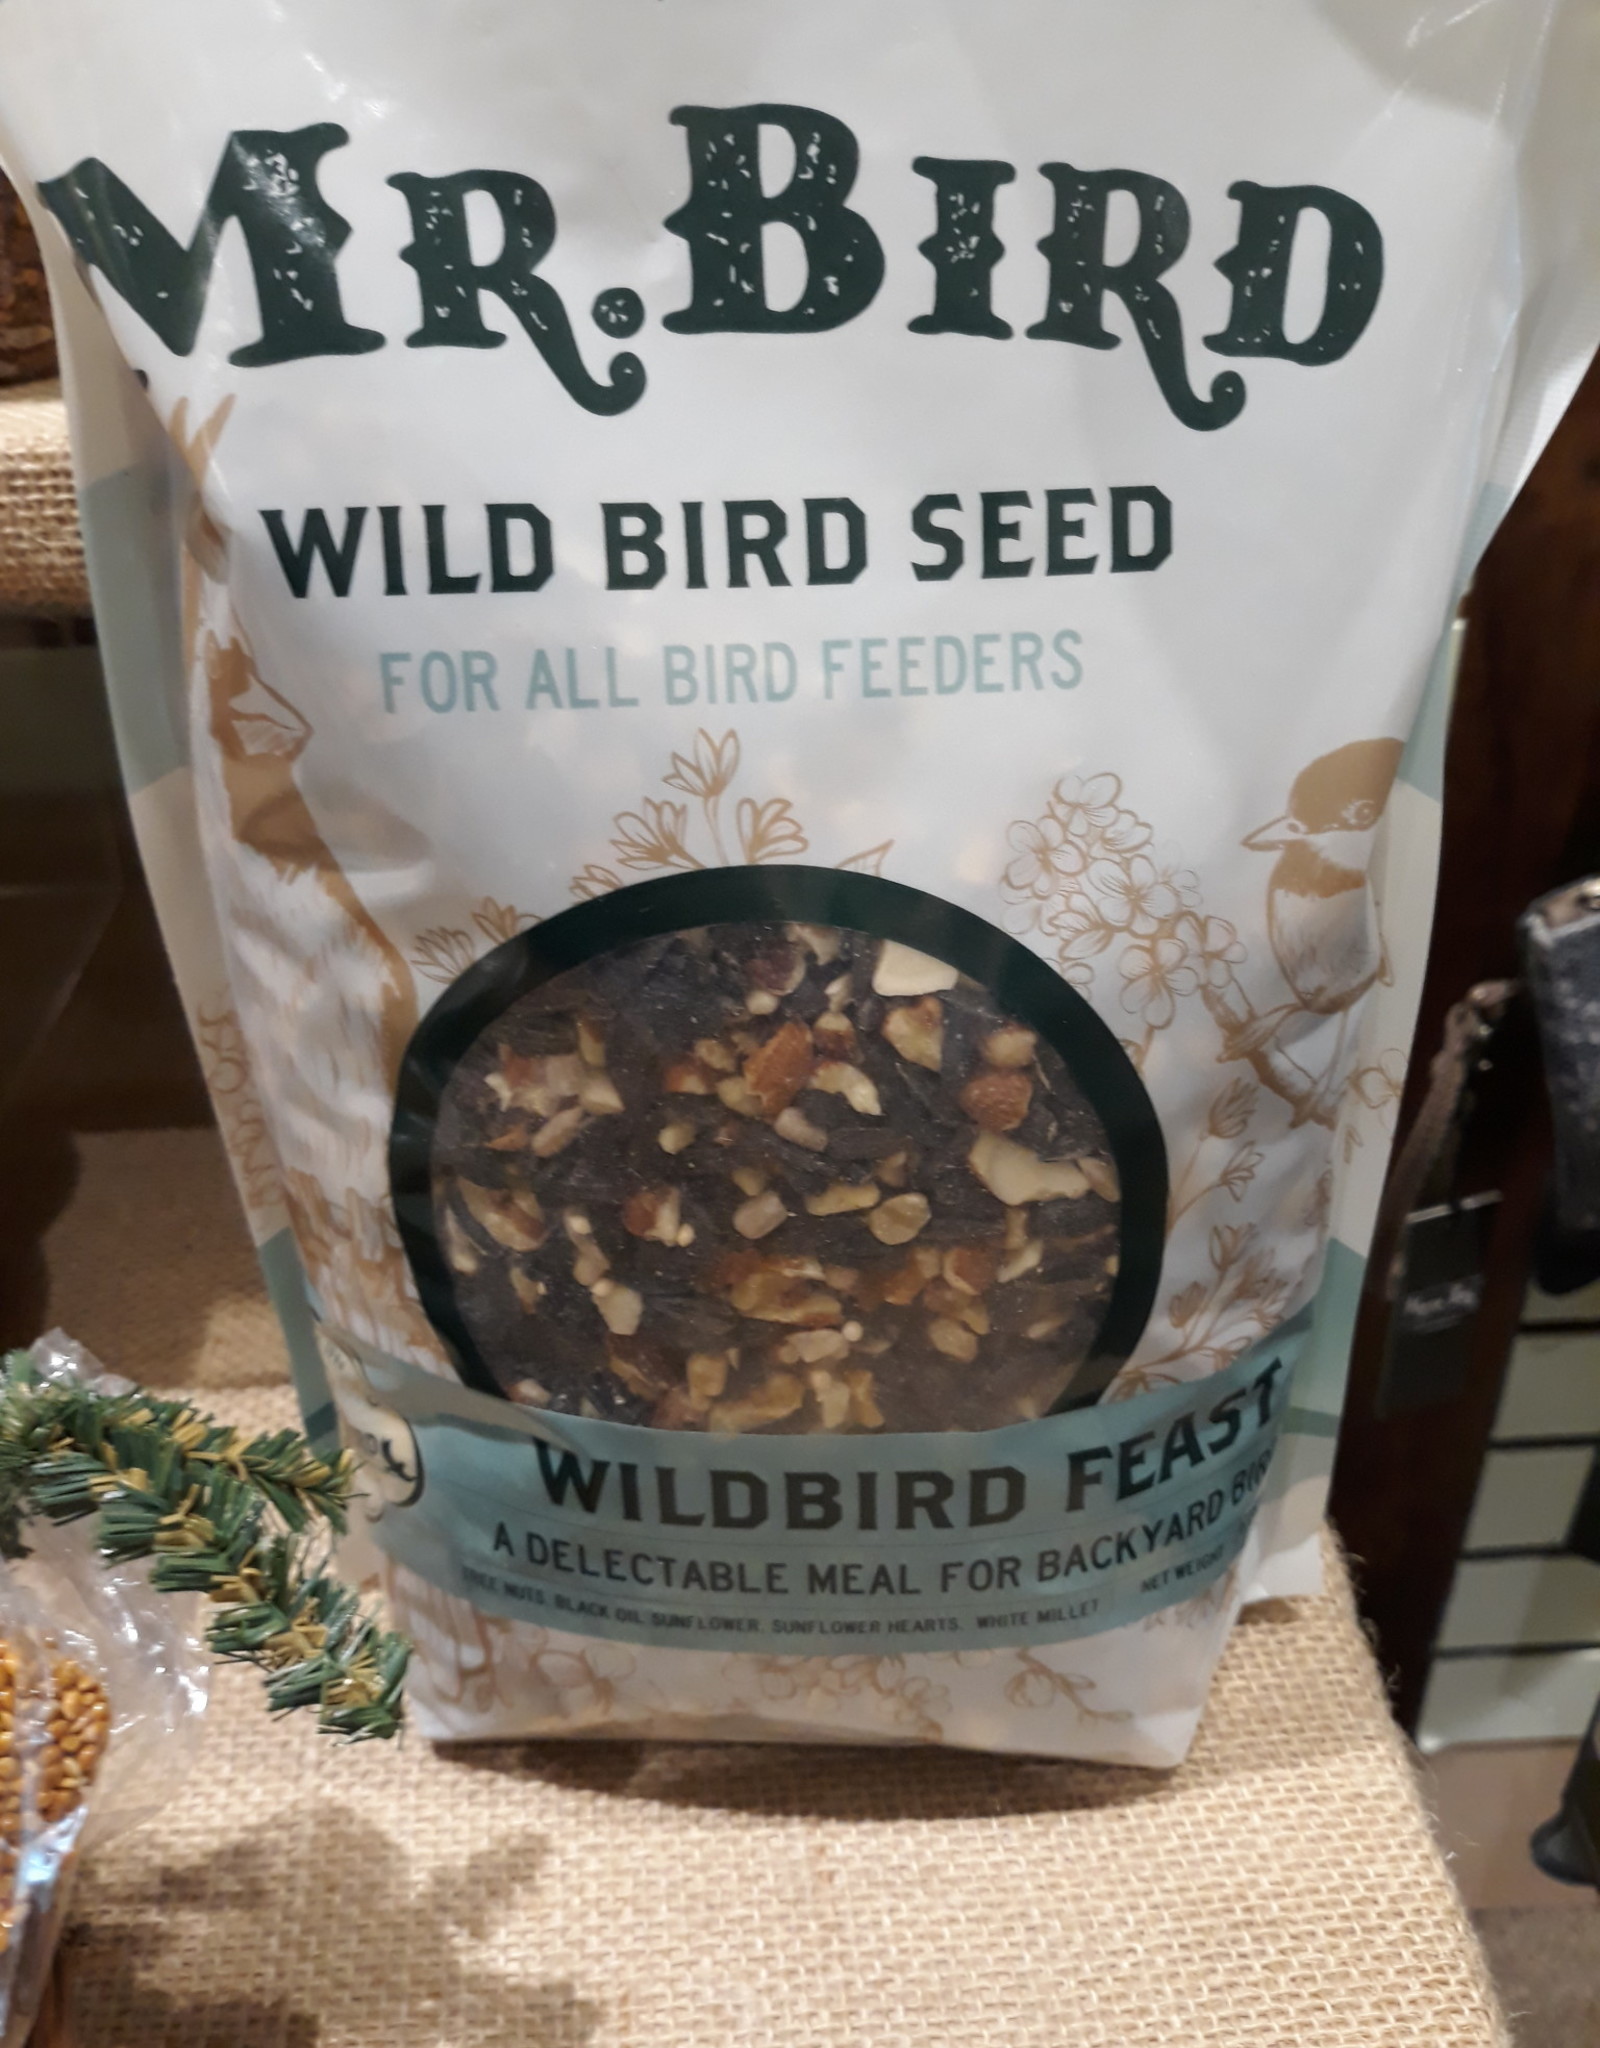 WildBird Feast 2lb2oz Bag